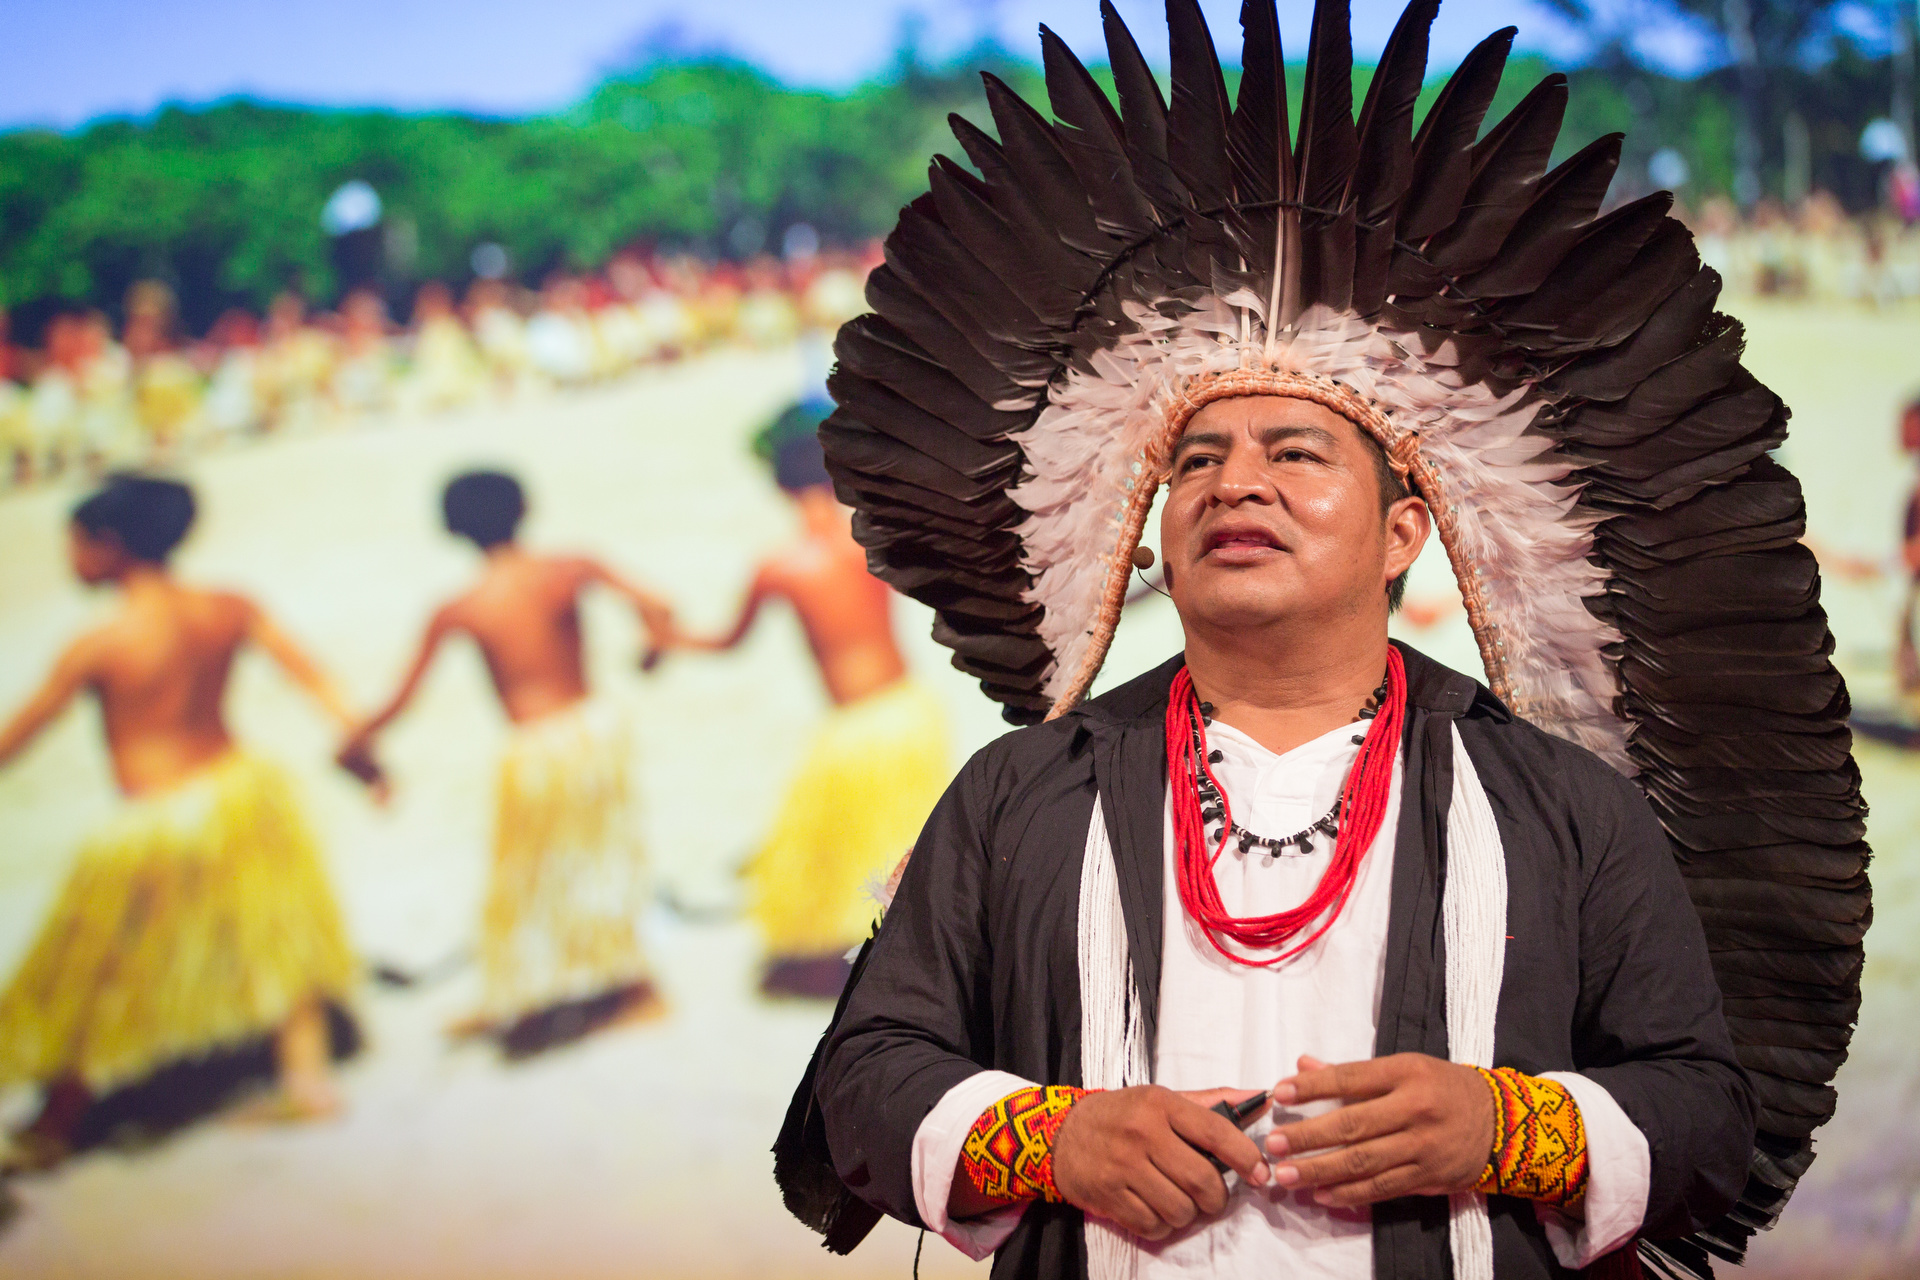 The rainforest is for every human being: Tashka Yawanawá at TEDGlobal
2014